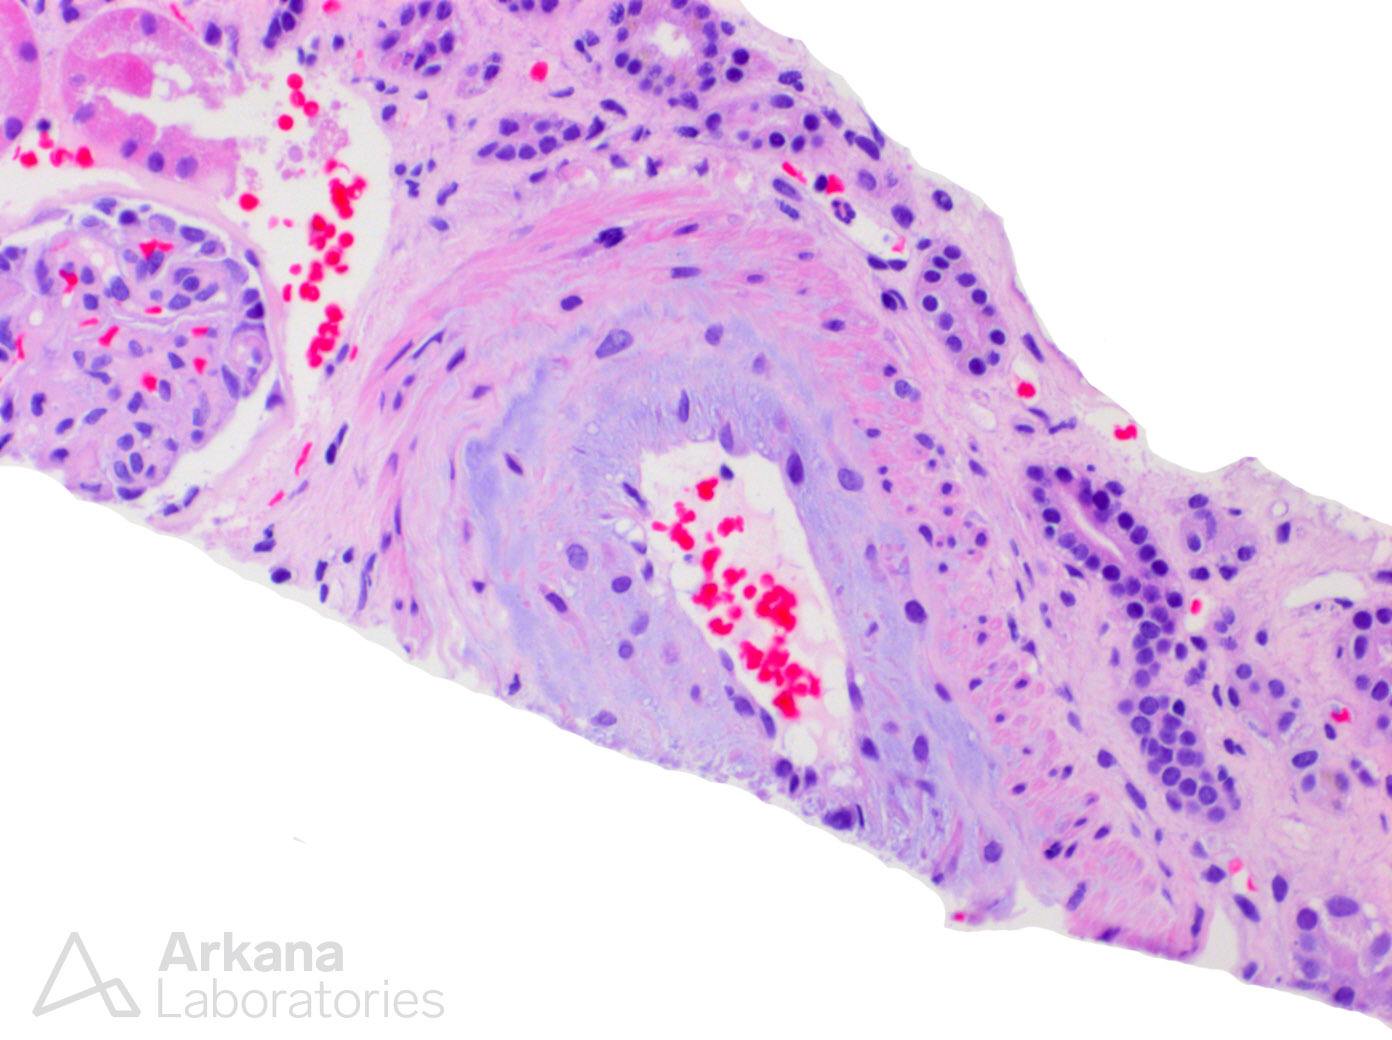 Scleroderma in a renal biopsy at Arkana Laboratories